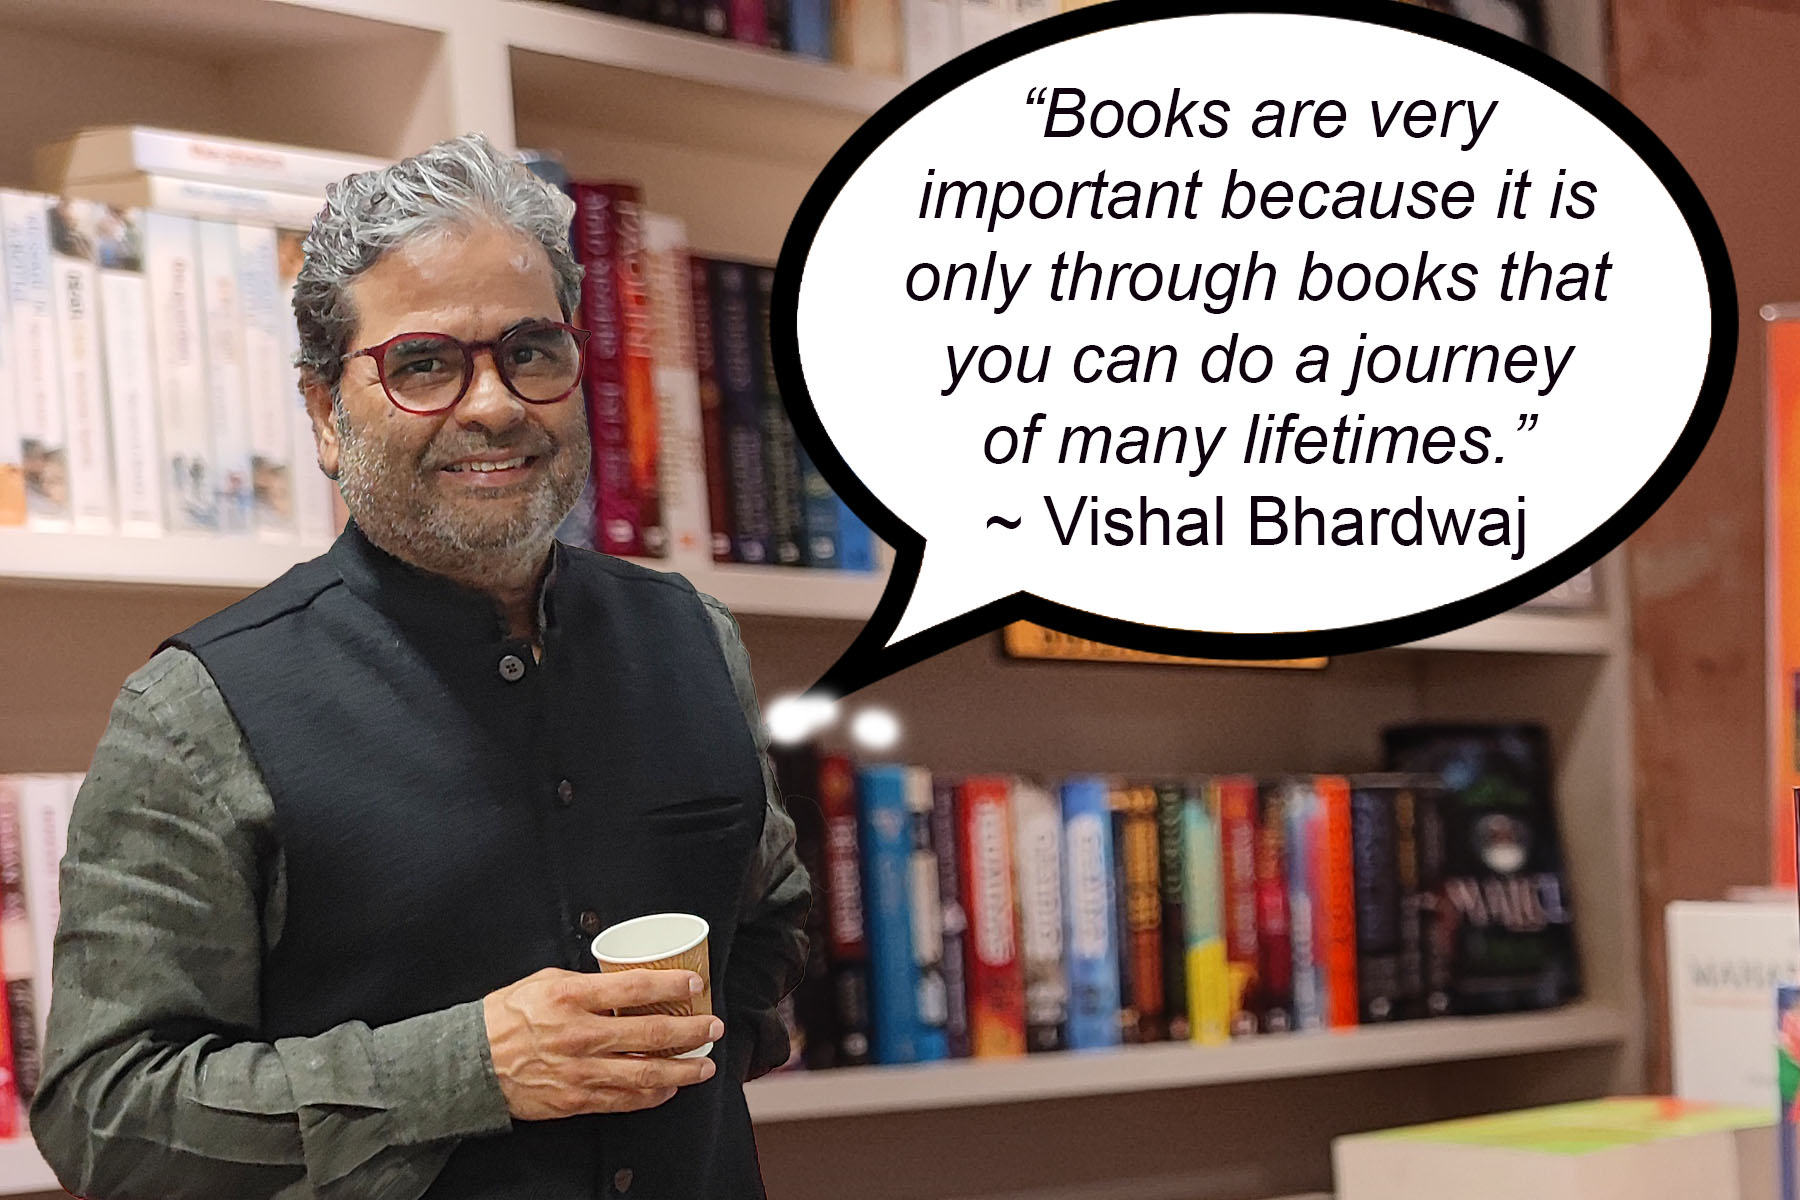 Interview: Books let us live many lifetimes, says Vishal Bhardwaj